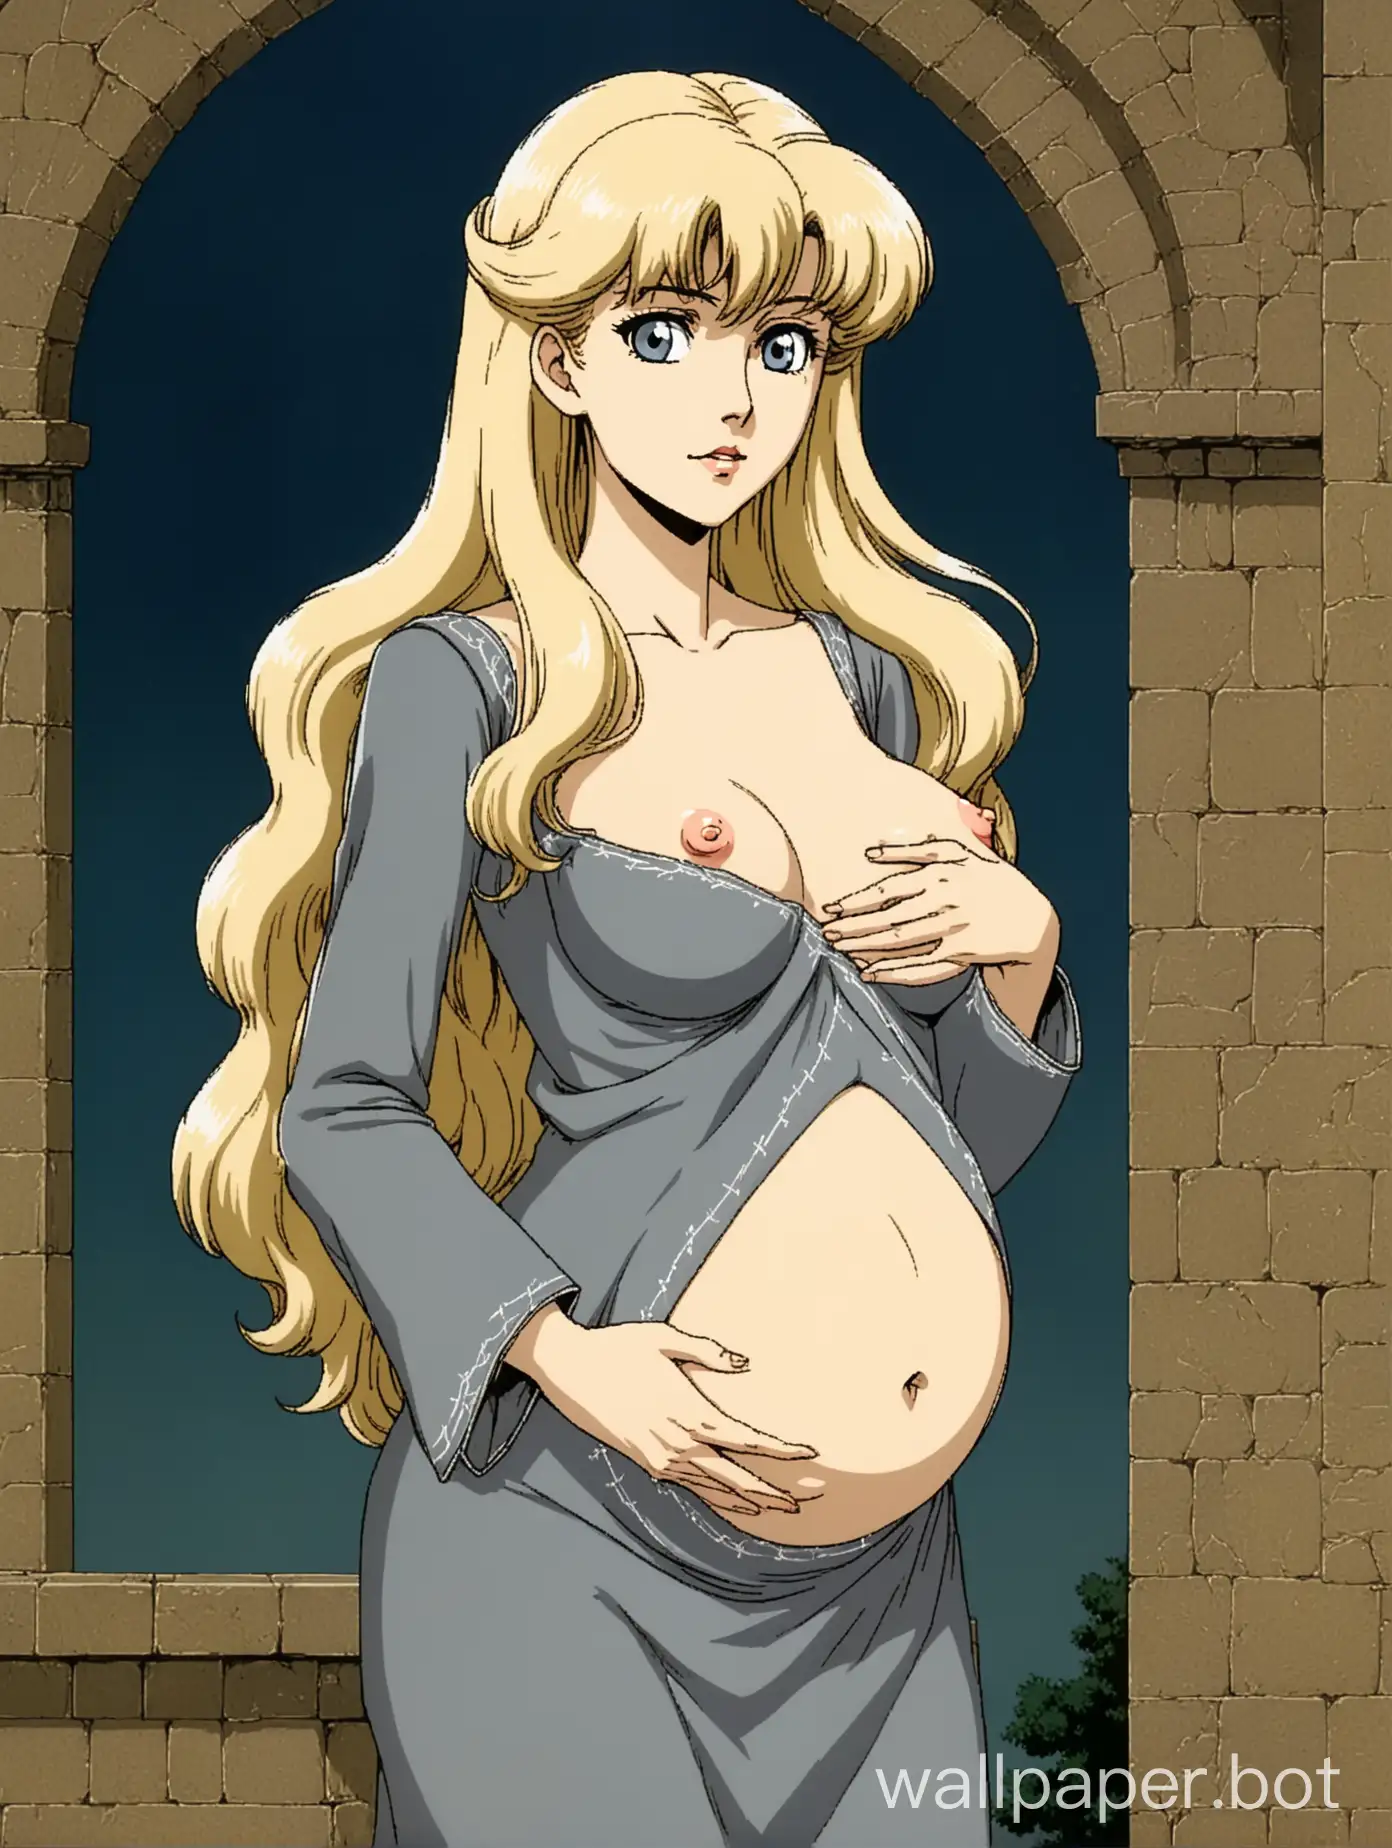 Pregnant-Medieval-Elegance-in-1980s-Retro-Anime-Style